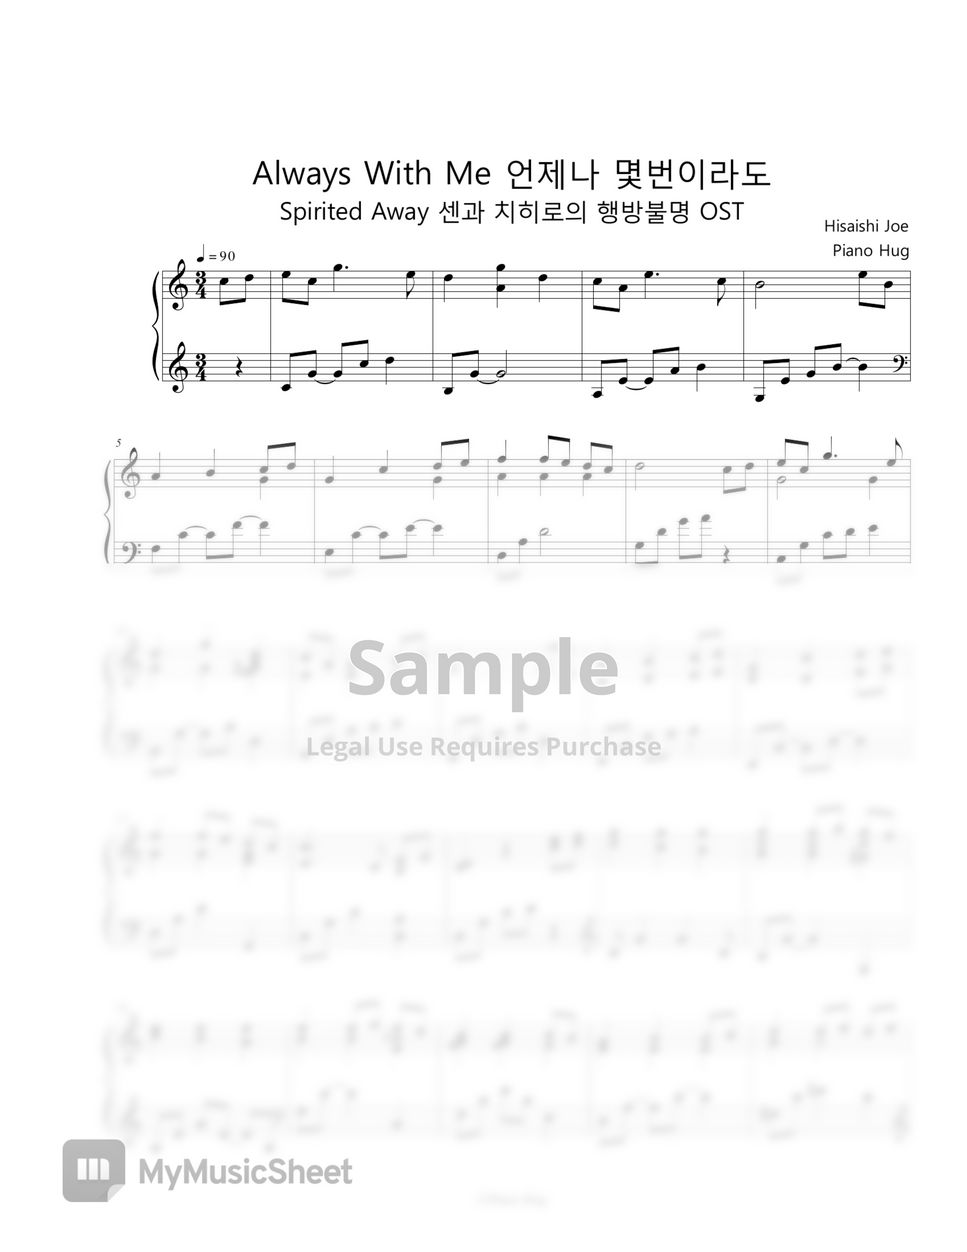 Hisaishi Joe - Always With Me 언제나 몇번이라도 (Spirited Away 센과 치히로의 행방불명 OST) by Piano Hug